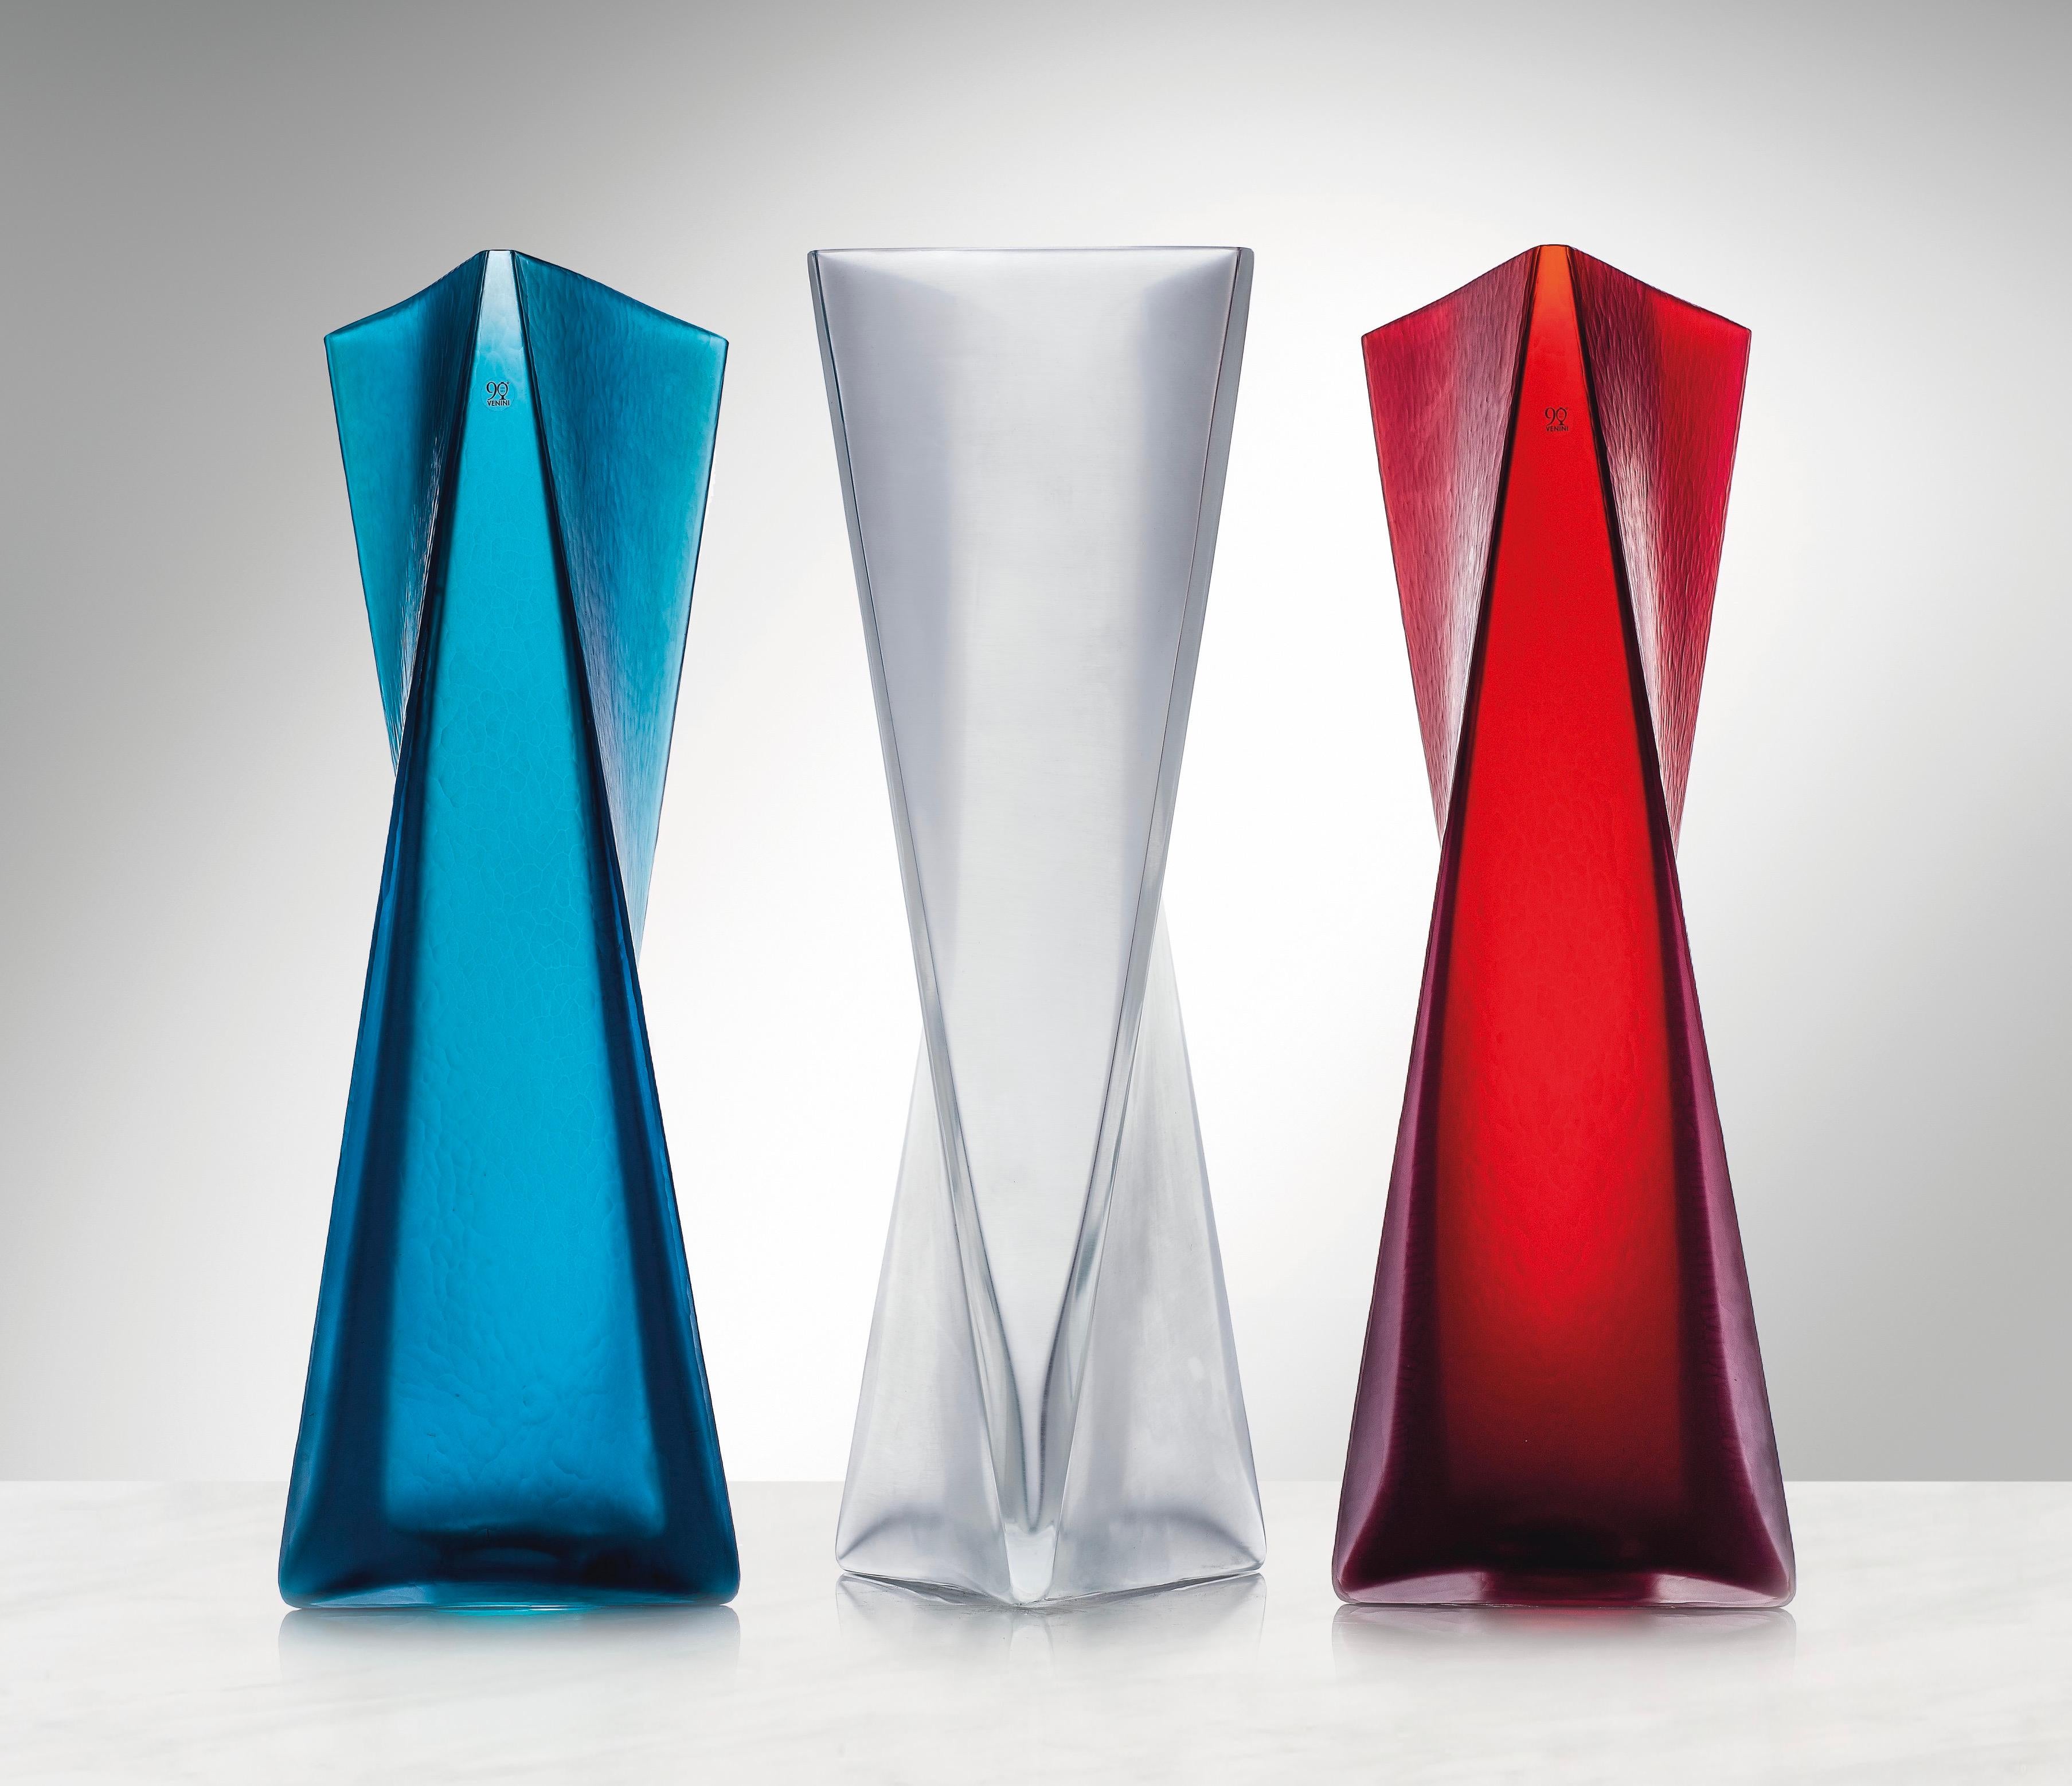 For Vetreria Venini Murano, 2011
'Rosetta', 'Ghiaccio', & 'Velato': 3 glass sculptural vases, each acid-stamped ’90 Venini 2011 Ando’ and engraved ‘Venini 2011 8/30’
Each vase limited edition no. 8/30
(30 examples were cast in each colour by